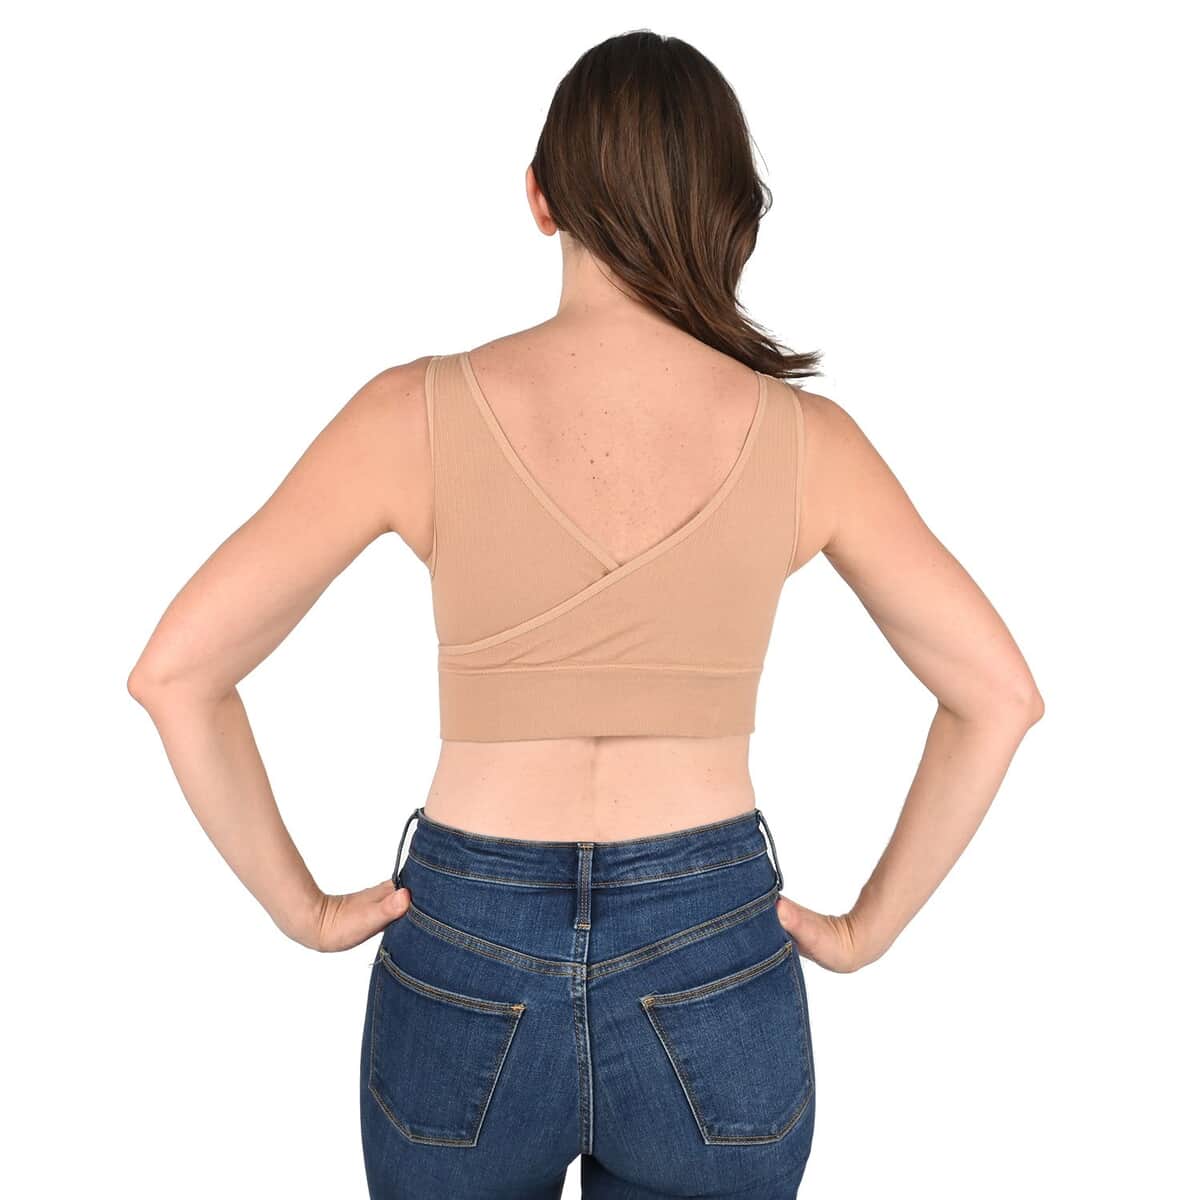 Sankom Patent Organic Cotton Support & Posture Bra - (Medium) Beige image number 1